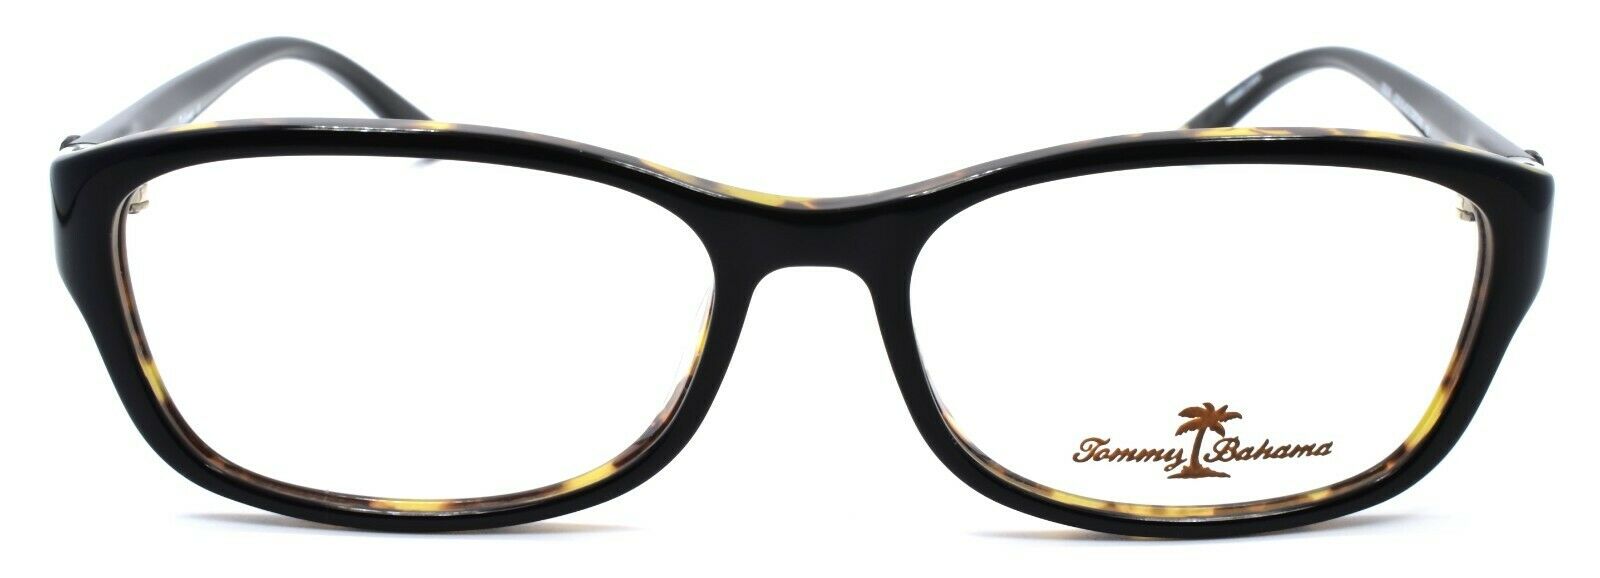 2-Tommy Bahama TB5036 226 Women's Eyeglasses Frames 53-16-135 Black / Tortoise-788678561657-IKSpecs